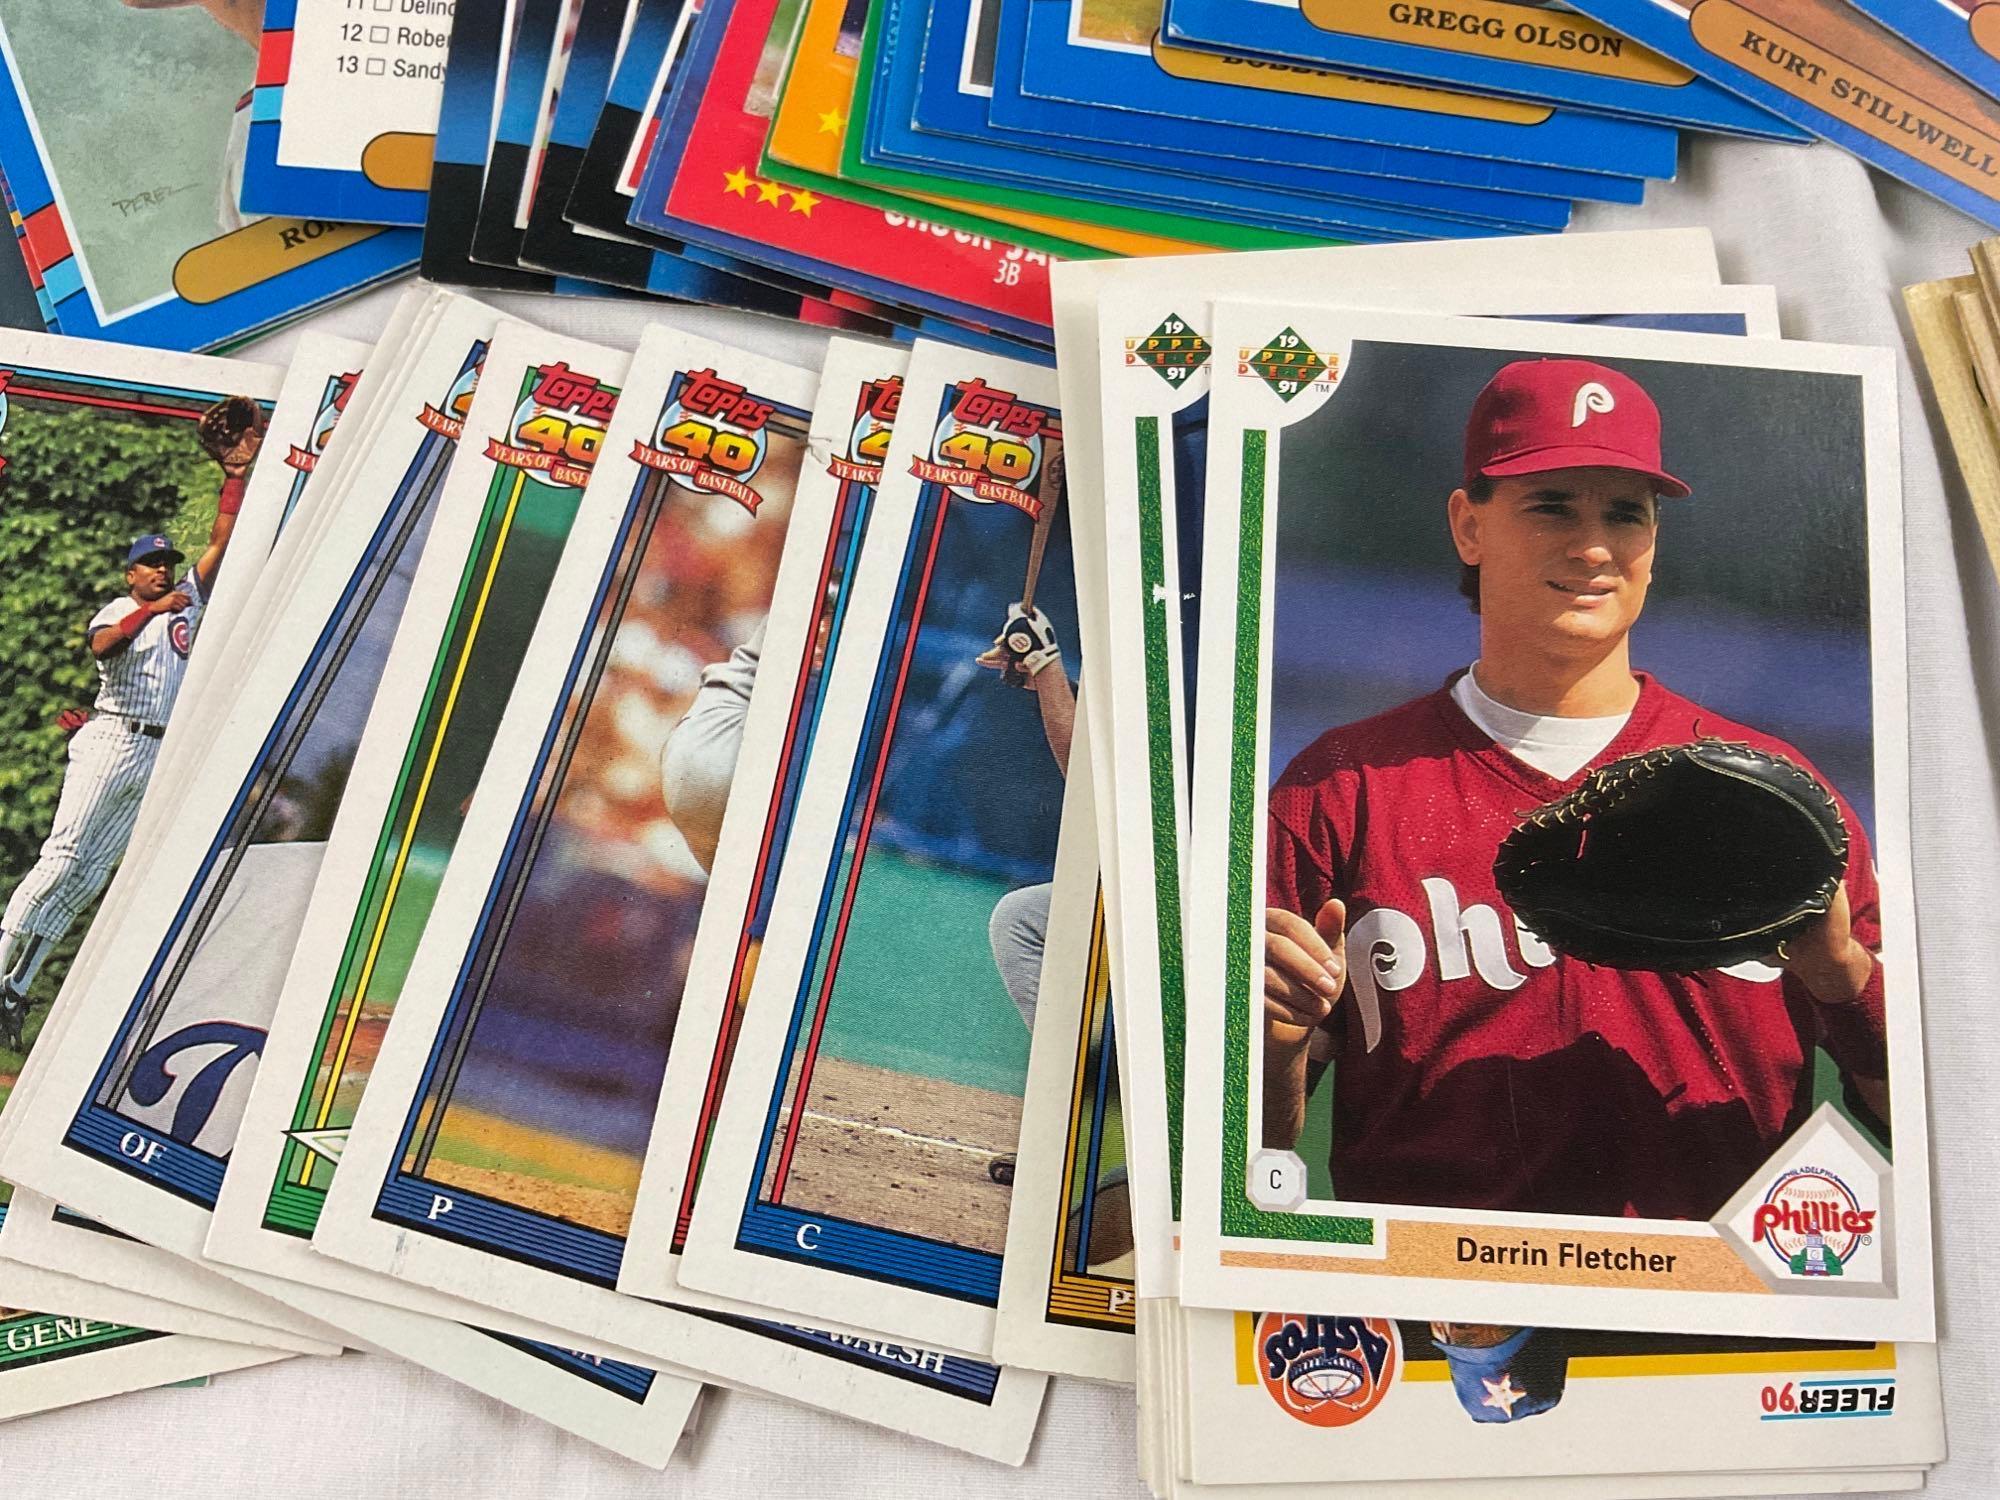 Lot of MLB pro baseball sports trading cards; Upper Deck, Topps, DONRUSS, Leaf & more.